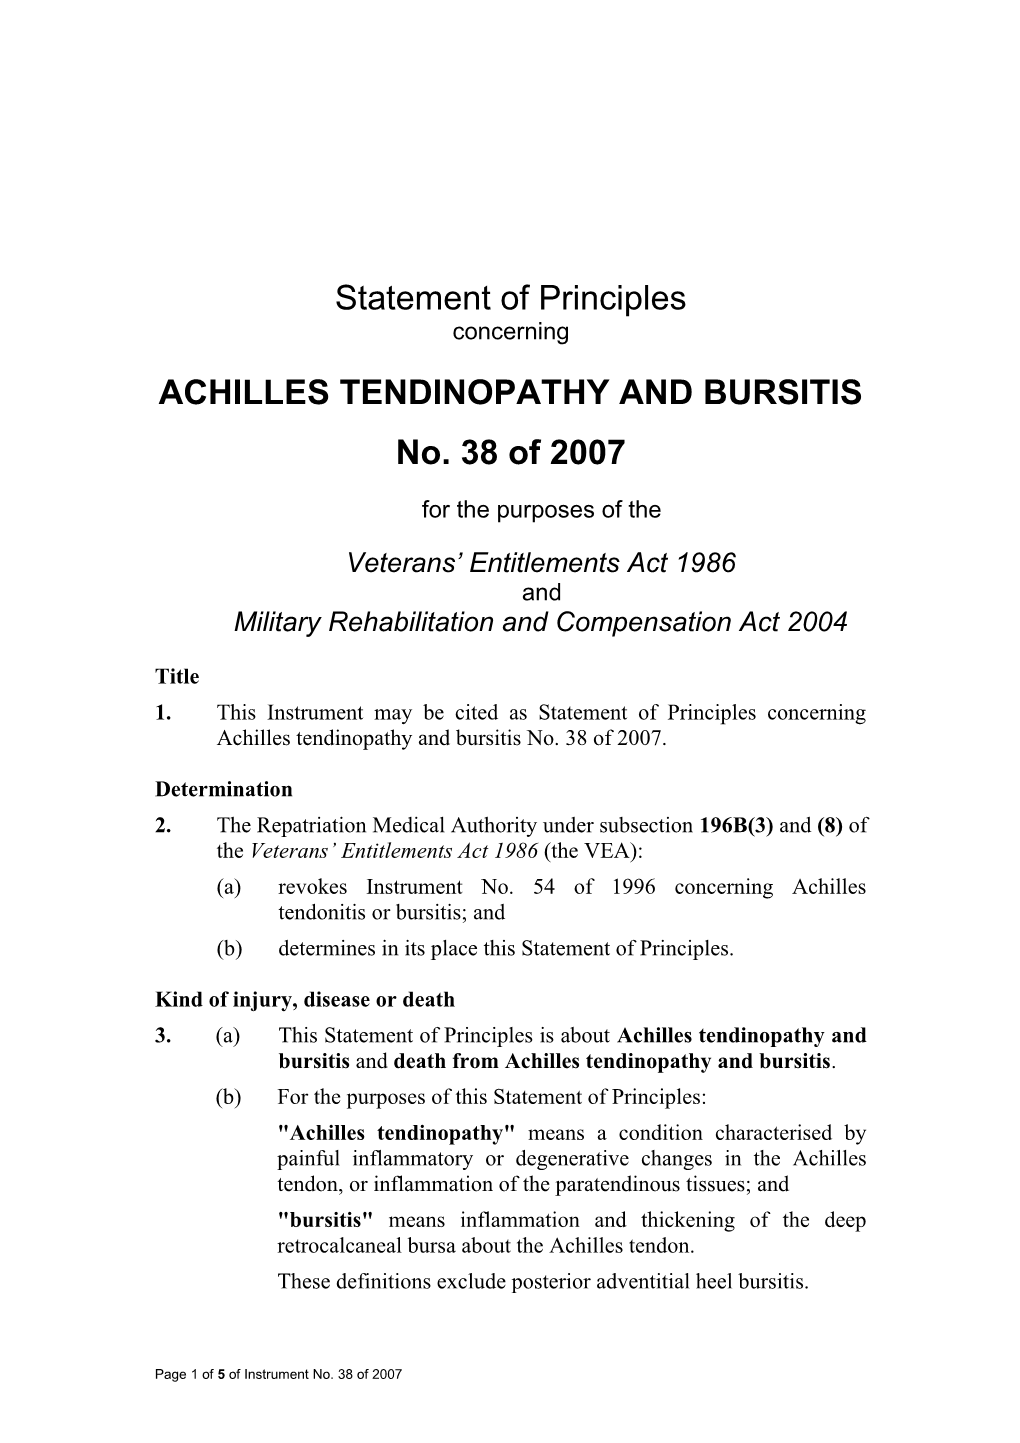 Achilles Tendinopathy and Bursitis